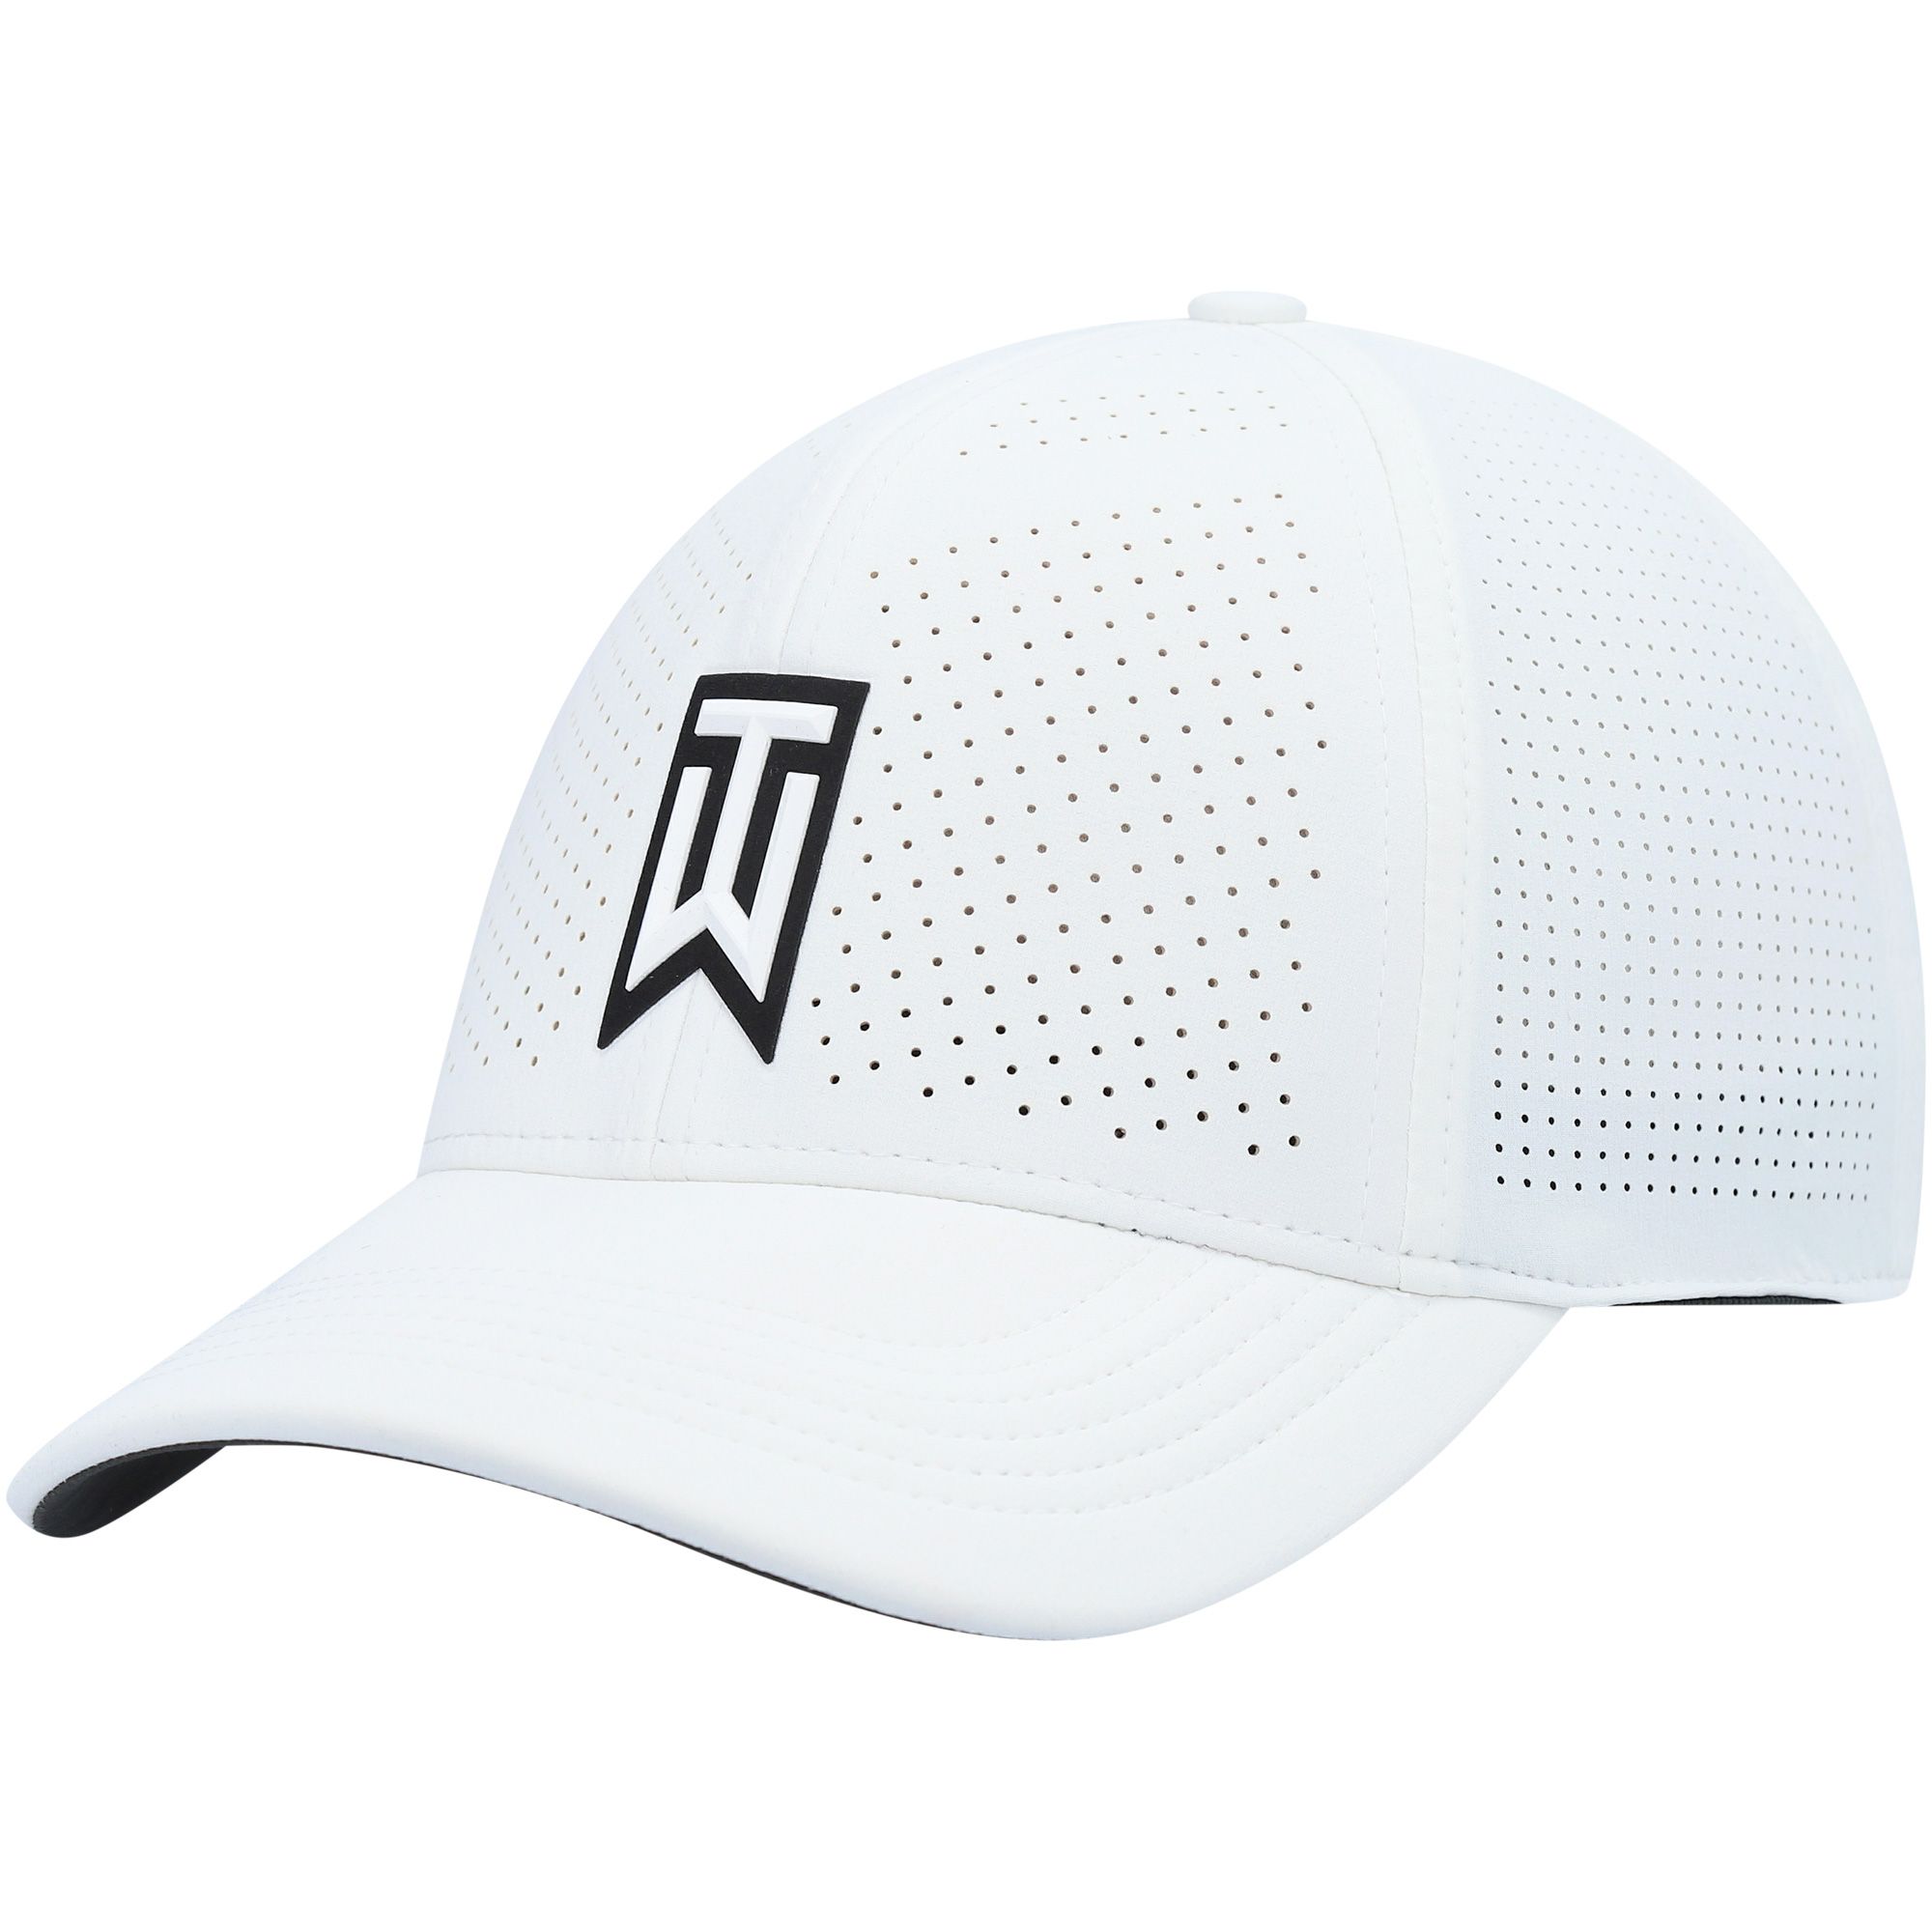 Nike Golf Tiger Woods Heritage 86 Performance Flex Hat – White | Fanatics